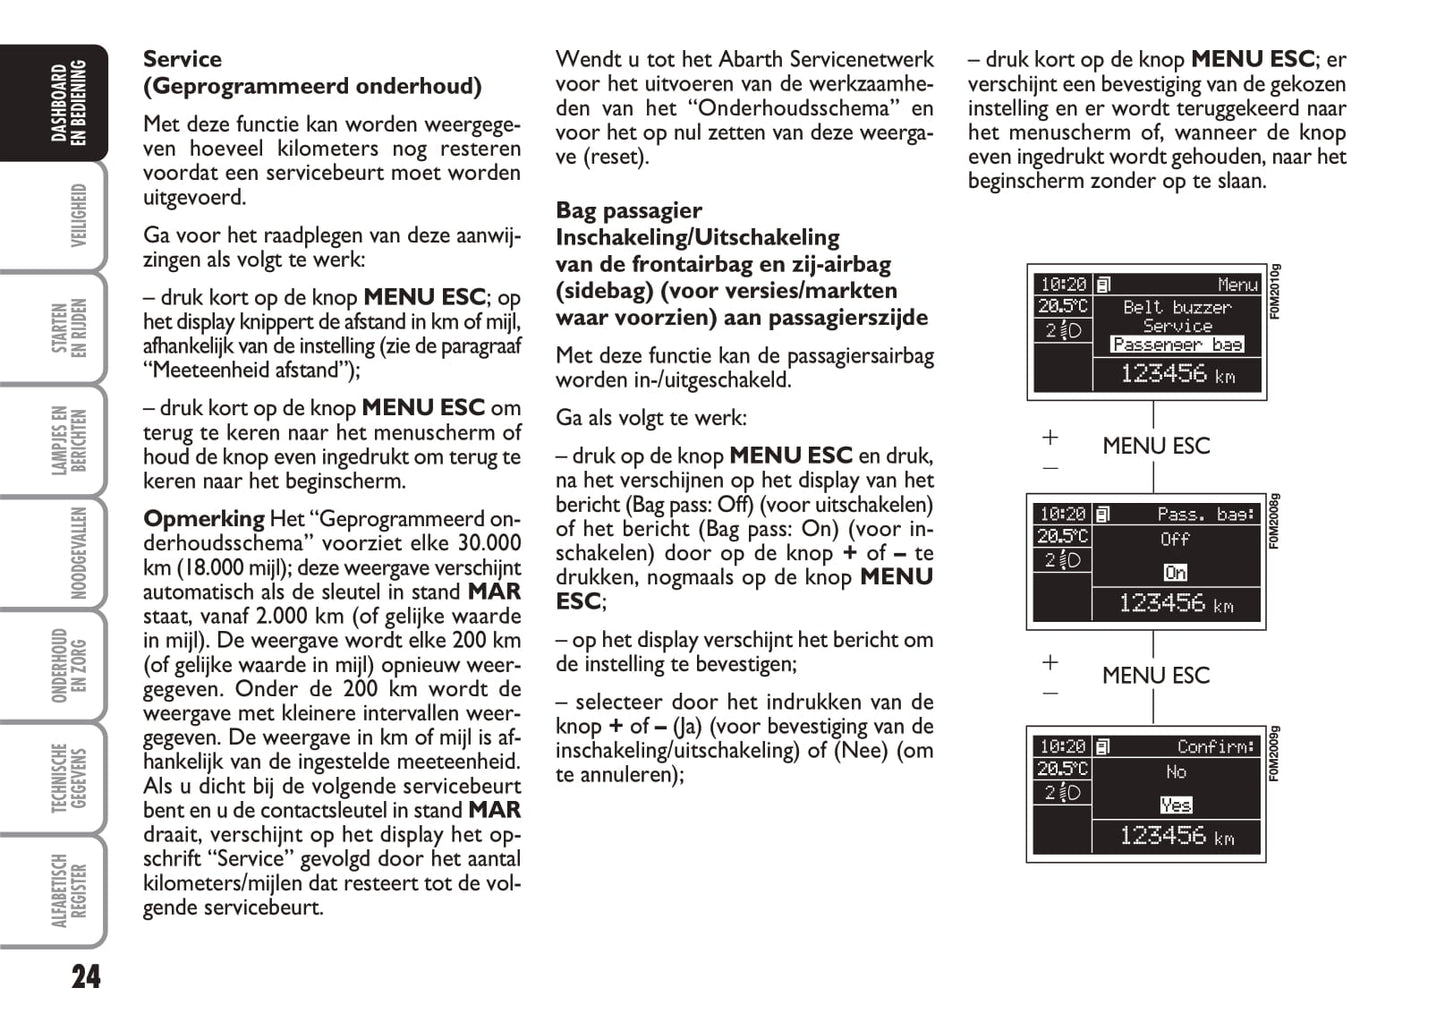 2007-2010 Abarth Grande Punto Owner's Manual | Dutch